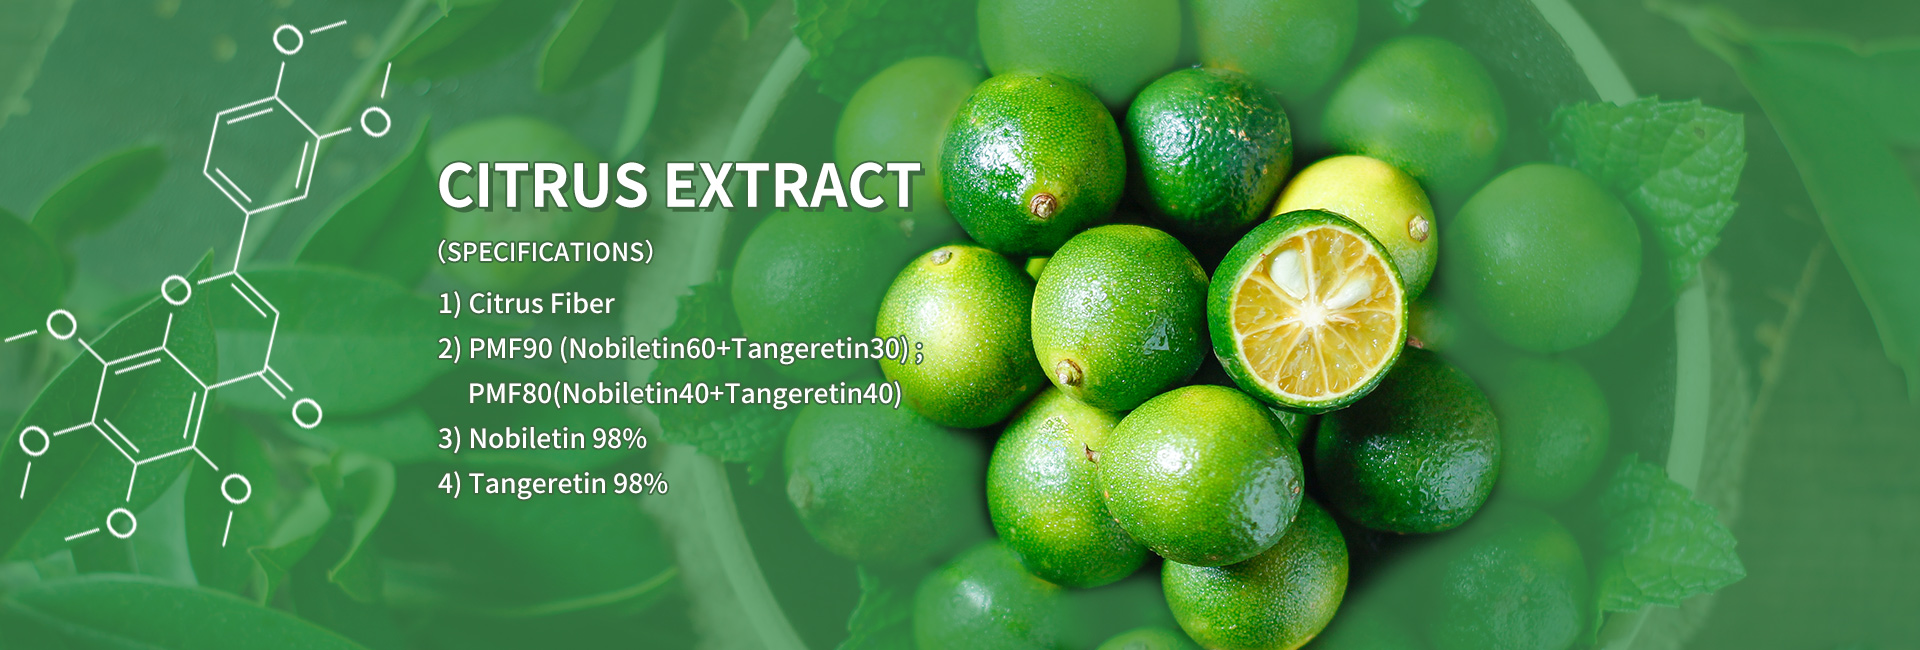 Citrus extract Tangeretin Nobiletin Sinennsetin Metoxyquercetin